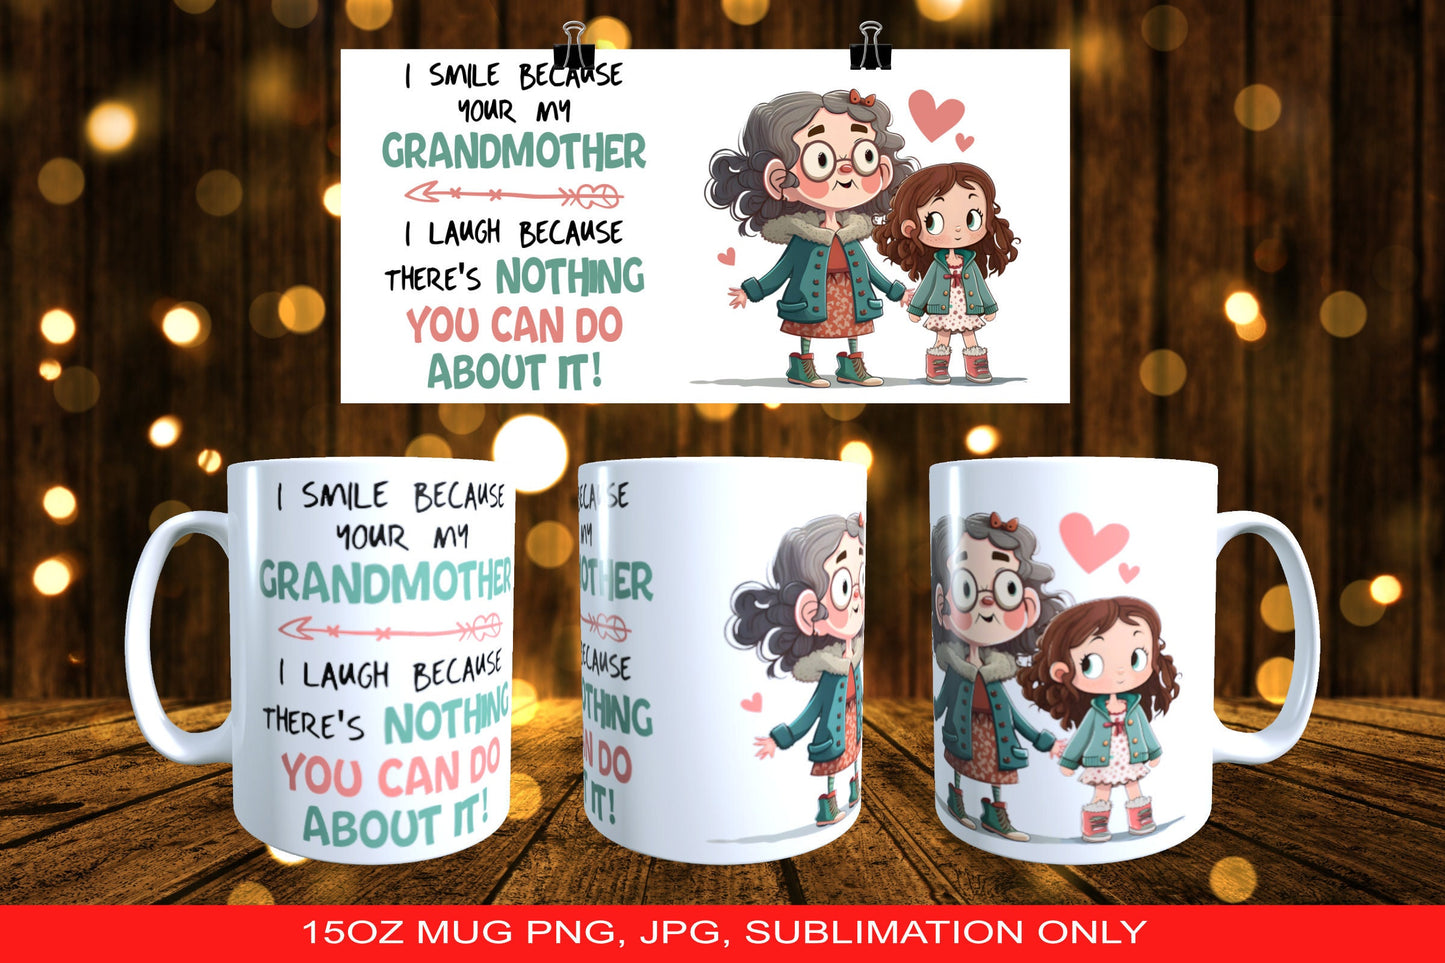 I Smile Because Your My Grandma Cute Hand Drawn Grandma and Granddaughter 15oz Sumblimation Mug Wrap Design PNG and JPEG ONLY